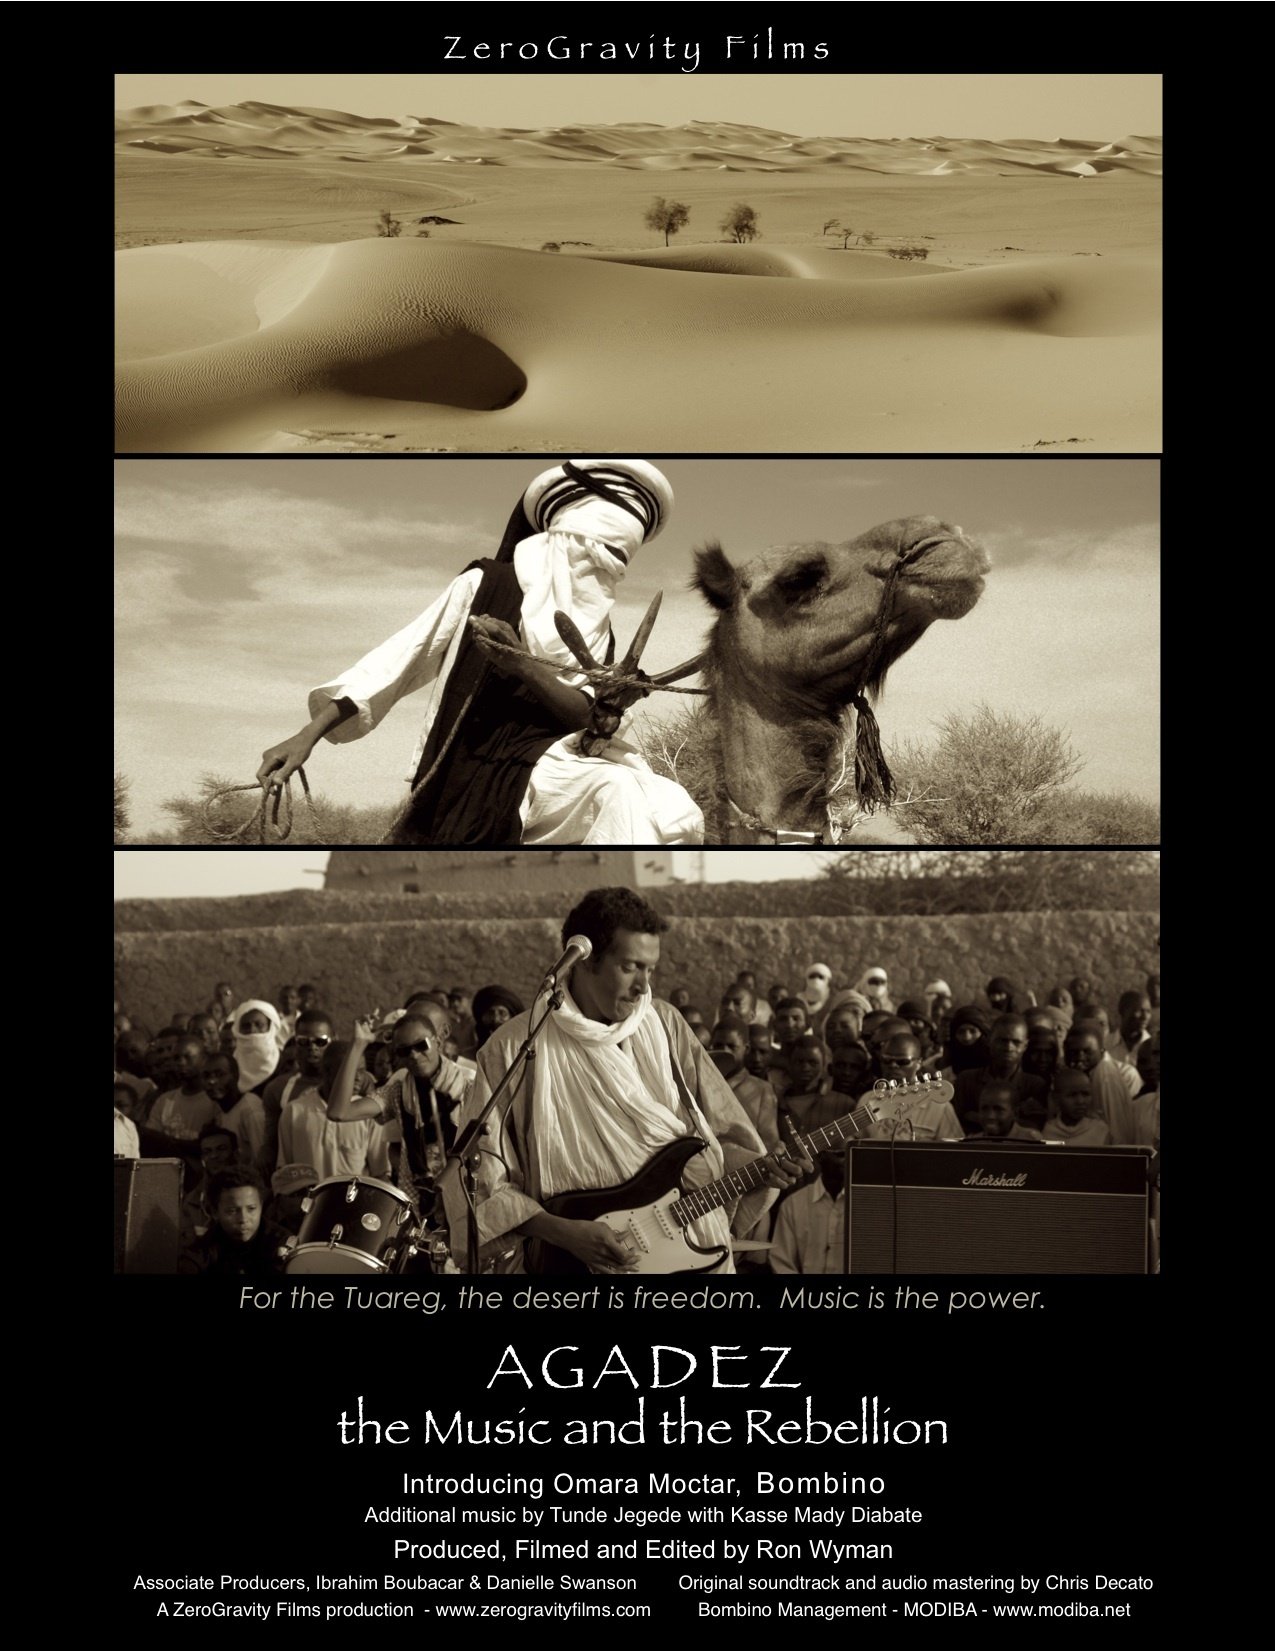 Agadez, the Music and the Rebellion (2010) Screenshot 3 